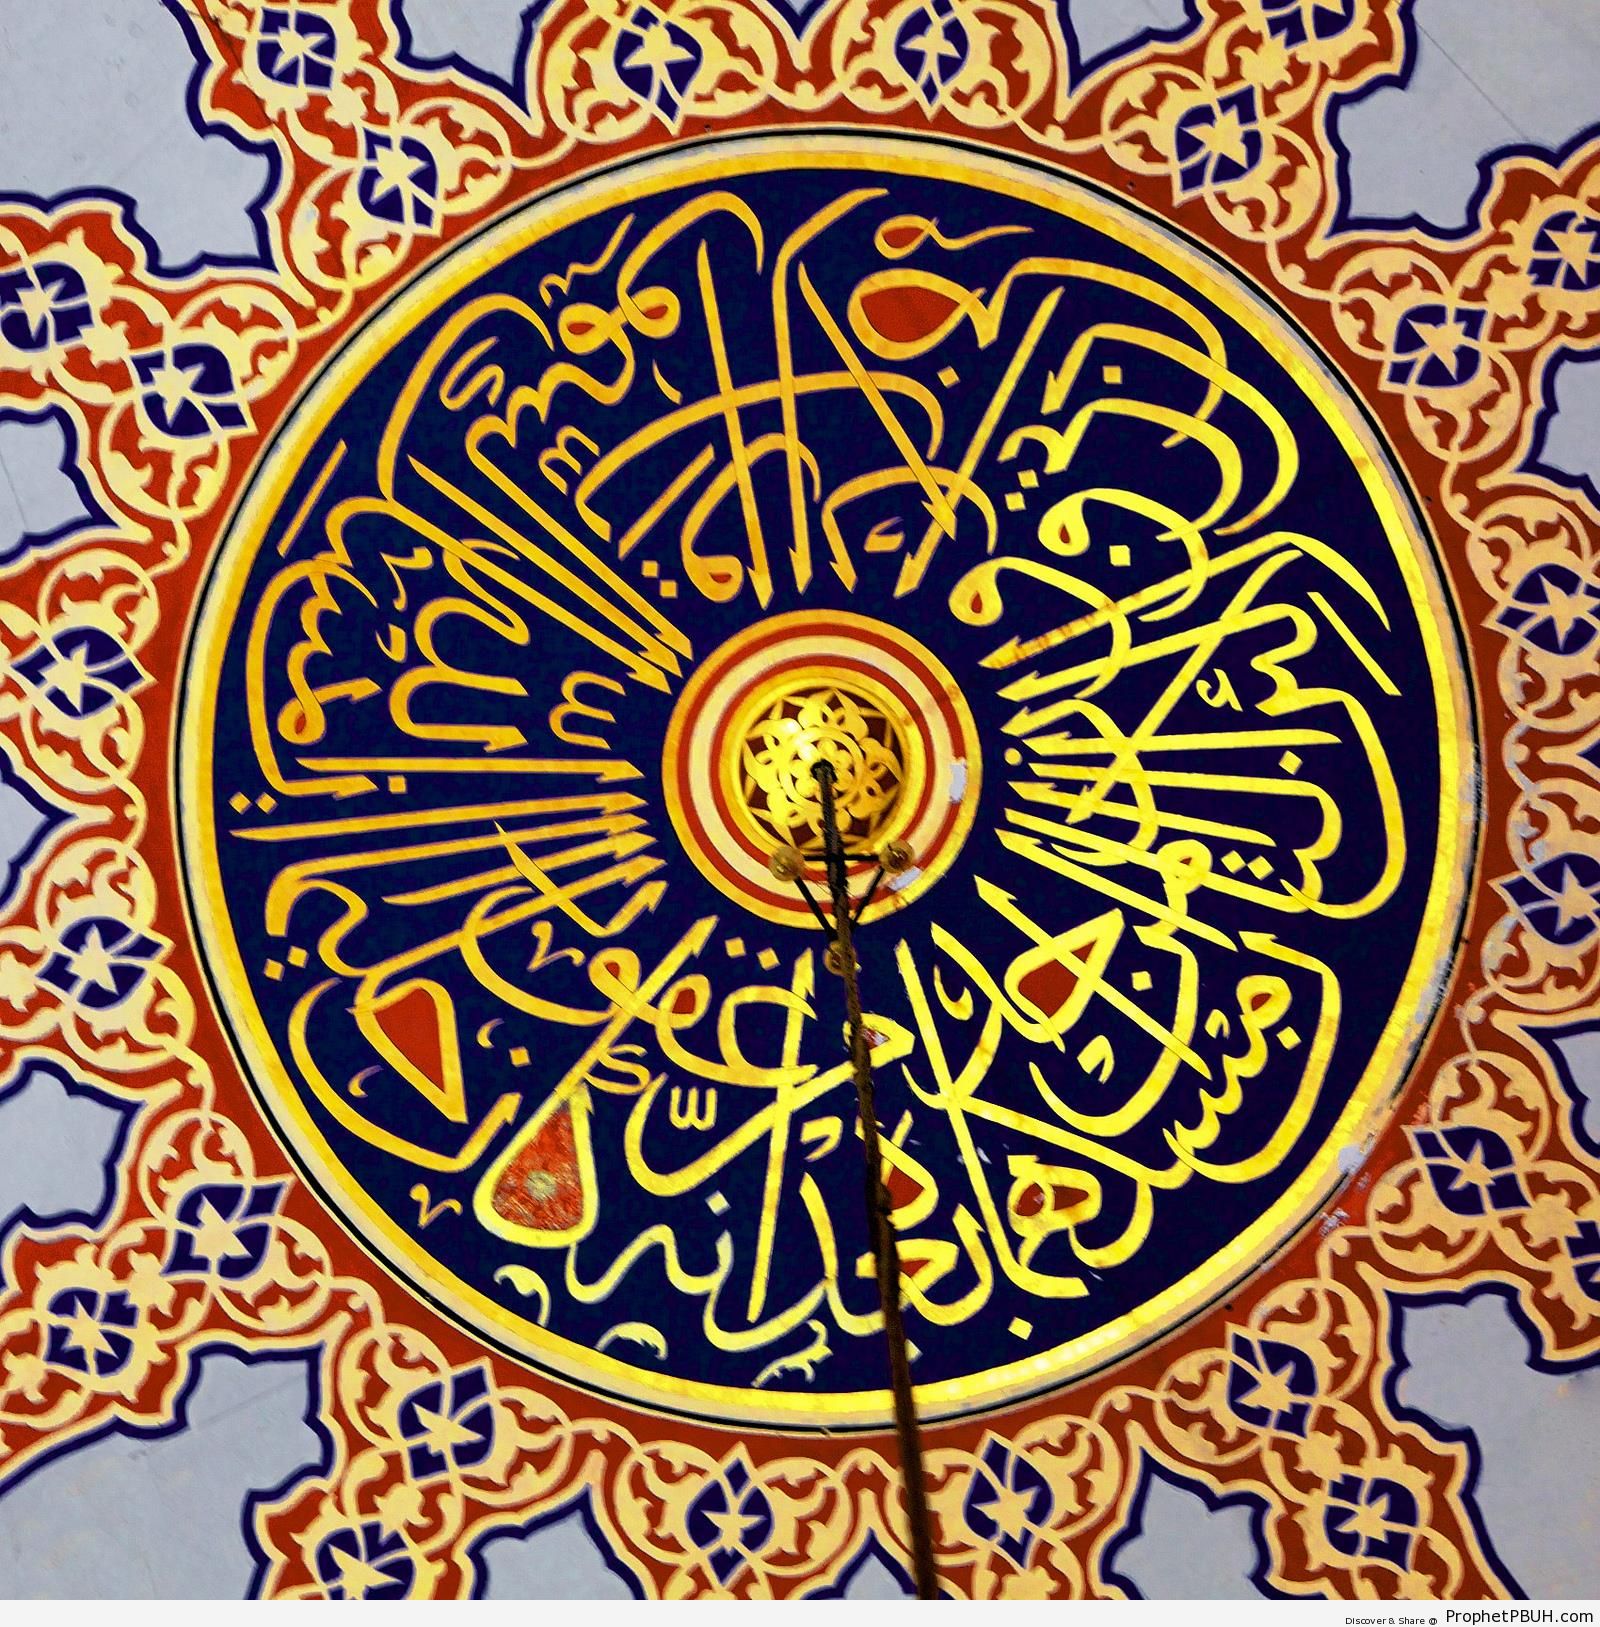 Surat Fatir (Quran 35-41) Calligraphy Decorating Sultan Ahmad Mosque Dome Interior in Istanbul, Turkey - Islamic Architecture 